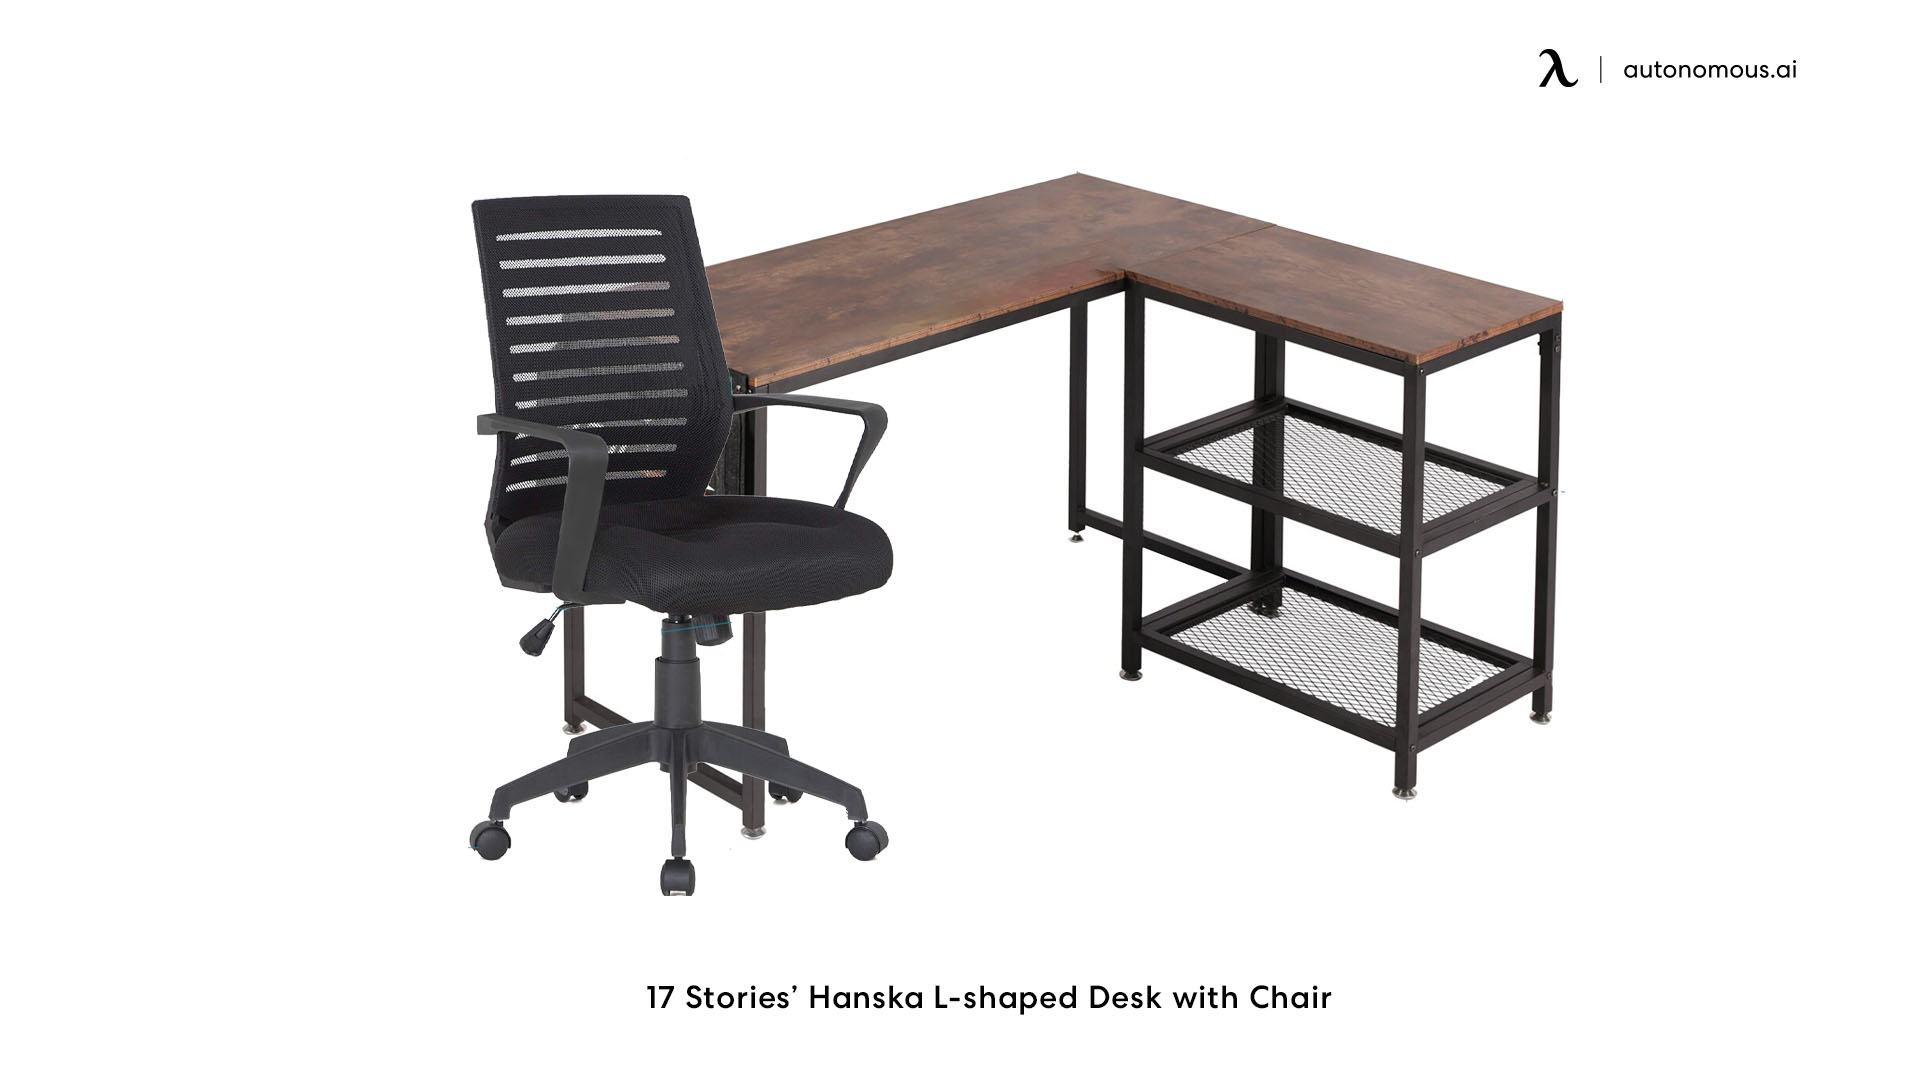 17 Stories’ Hanska office chair and desk combo